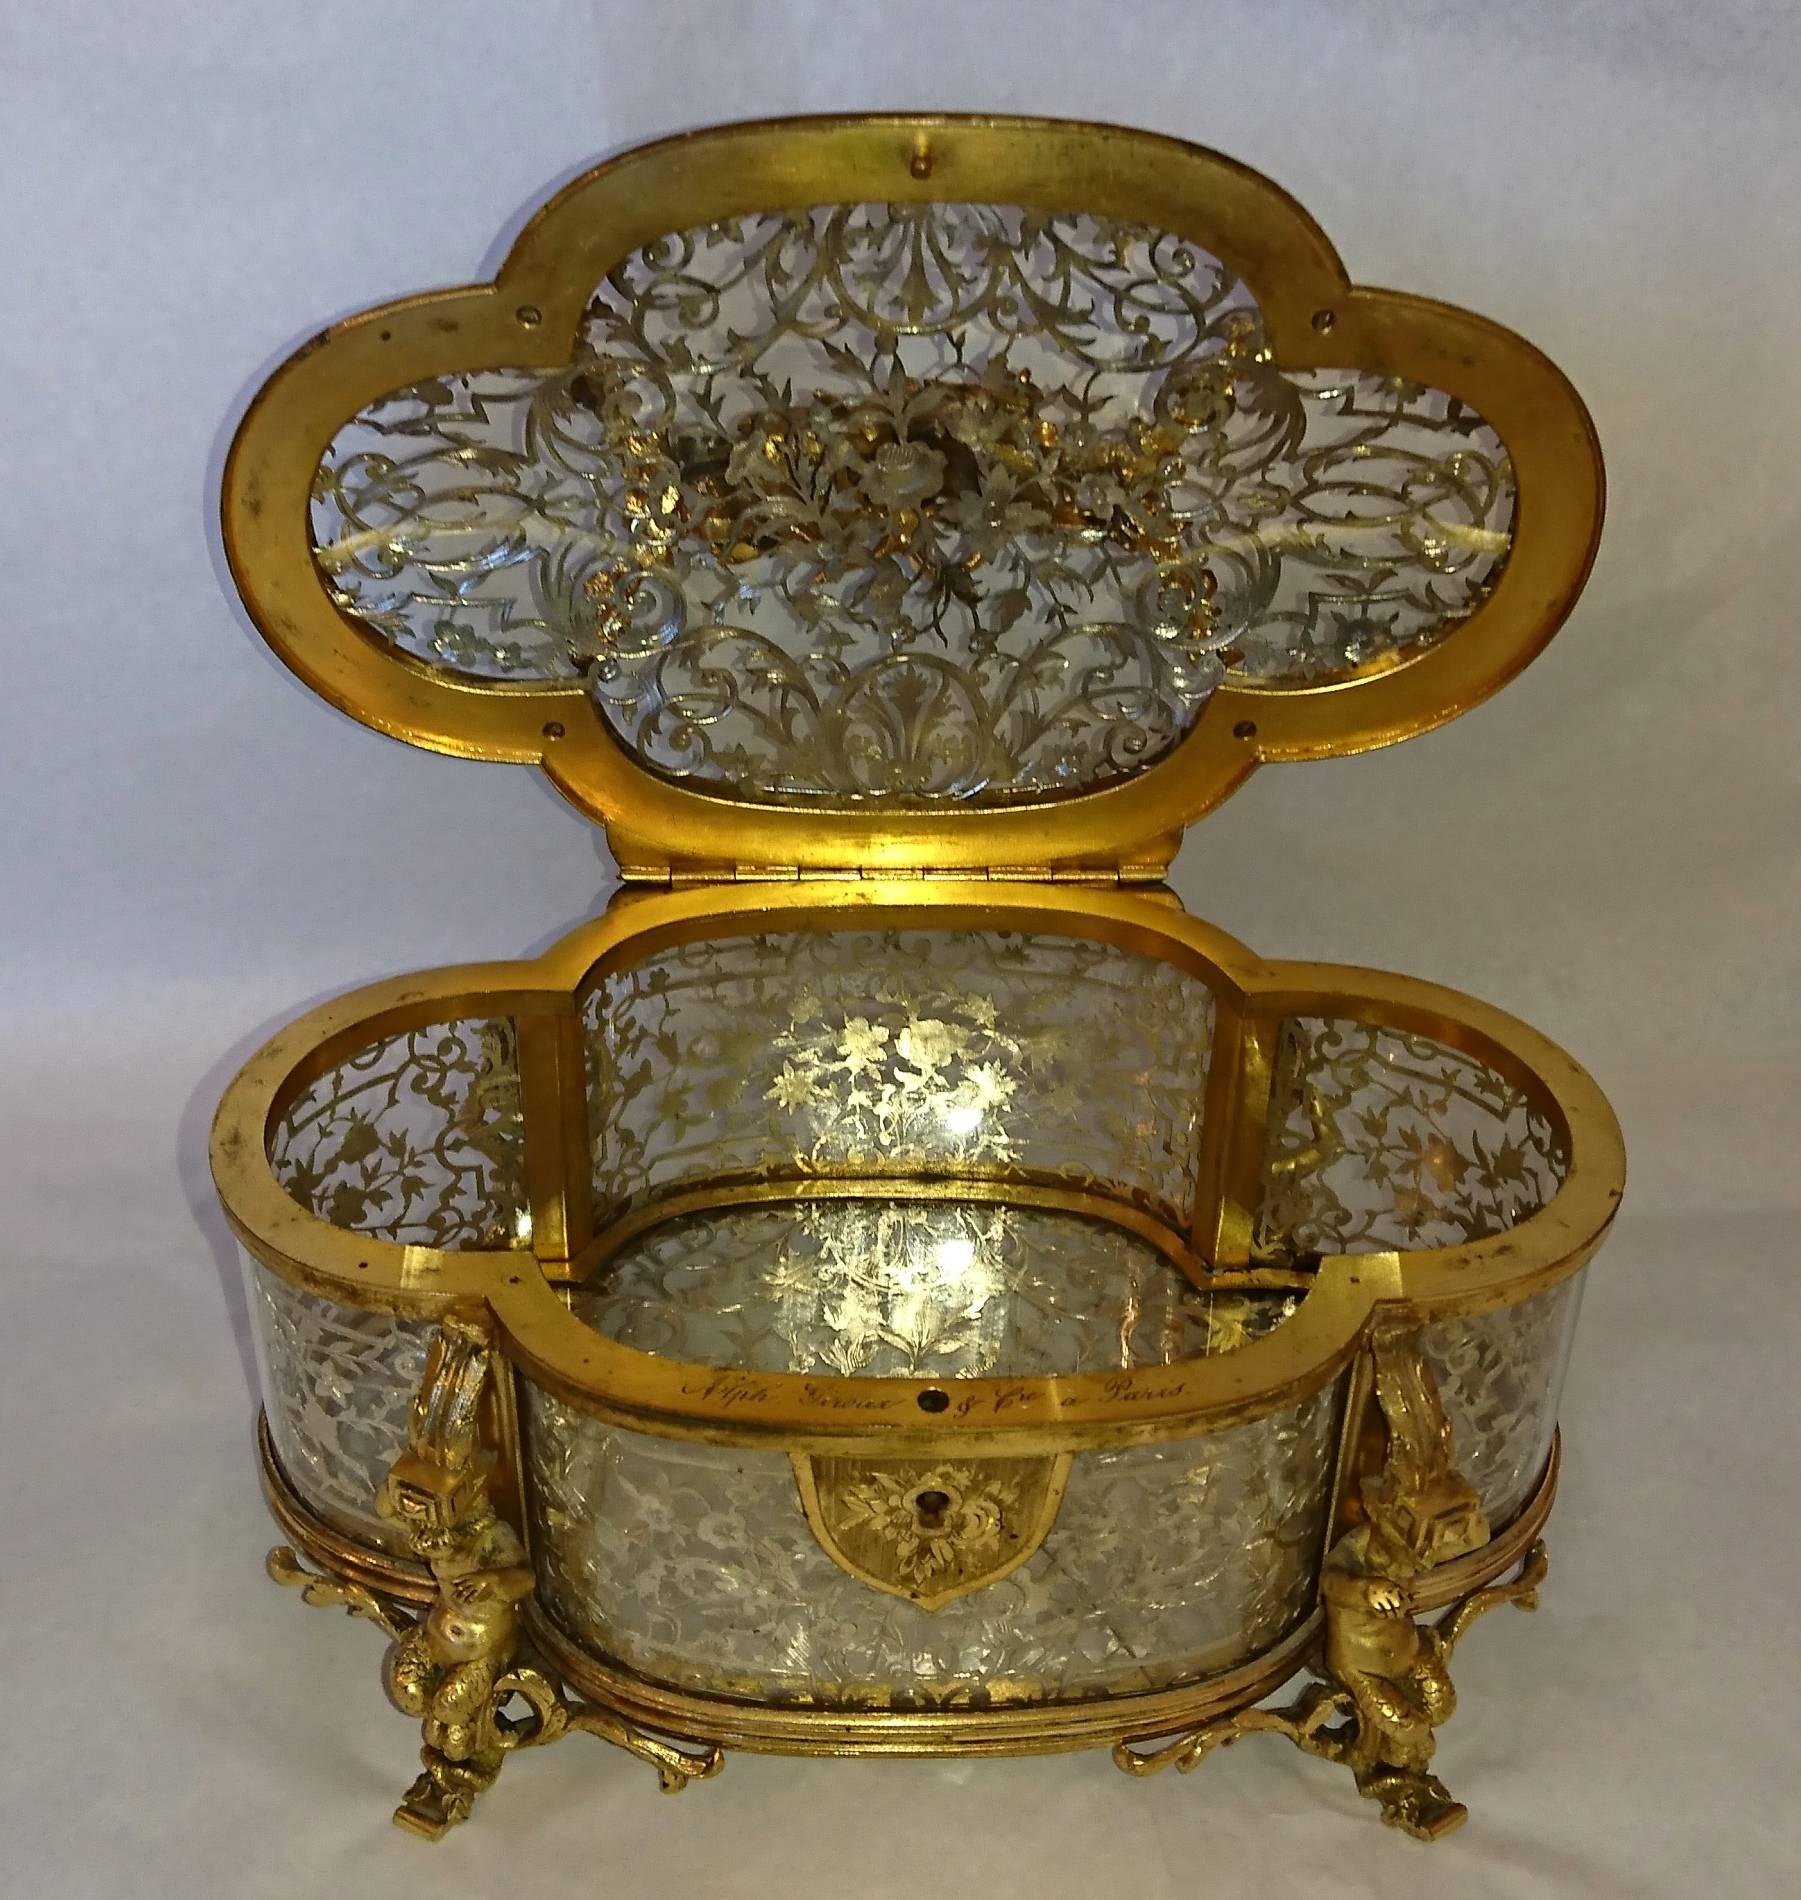 Rococo Revival Gilt Bronze and Silver Filigree Jewelry Casket, Alphonse Giroux & Cie, Paris For Sale